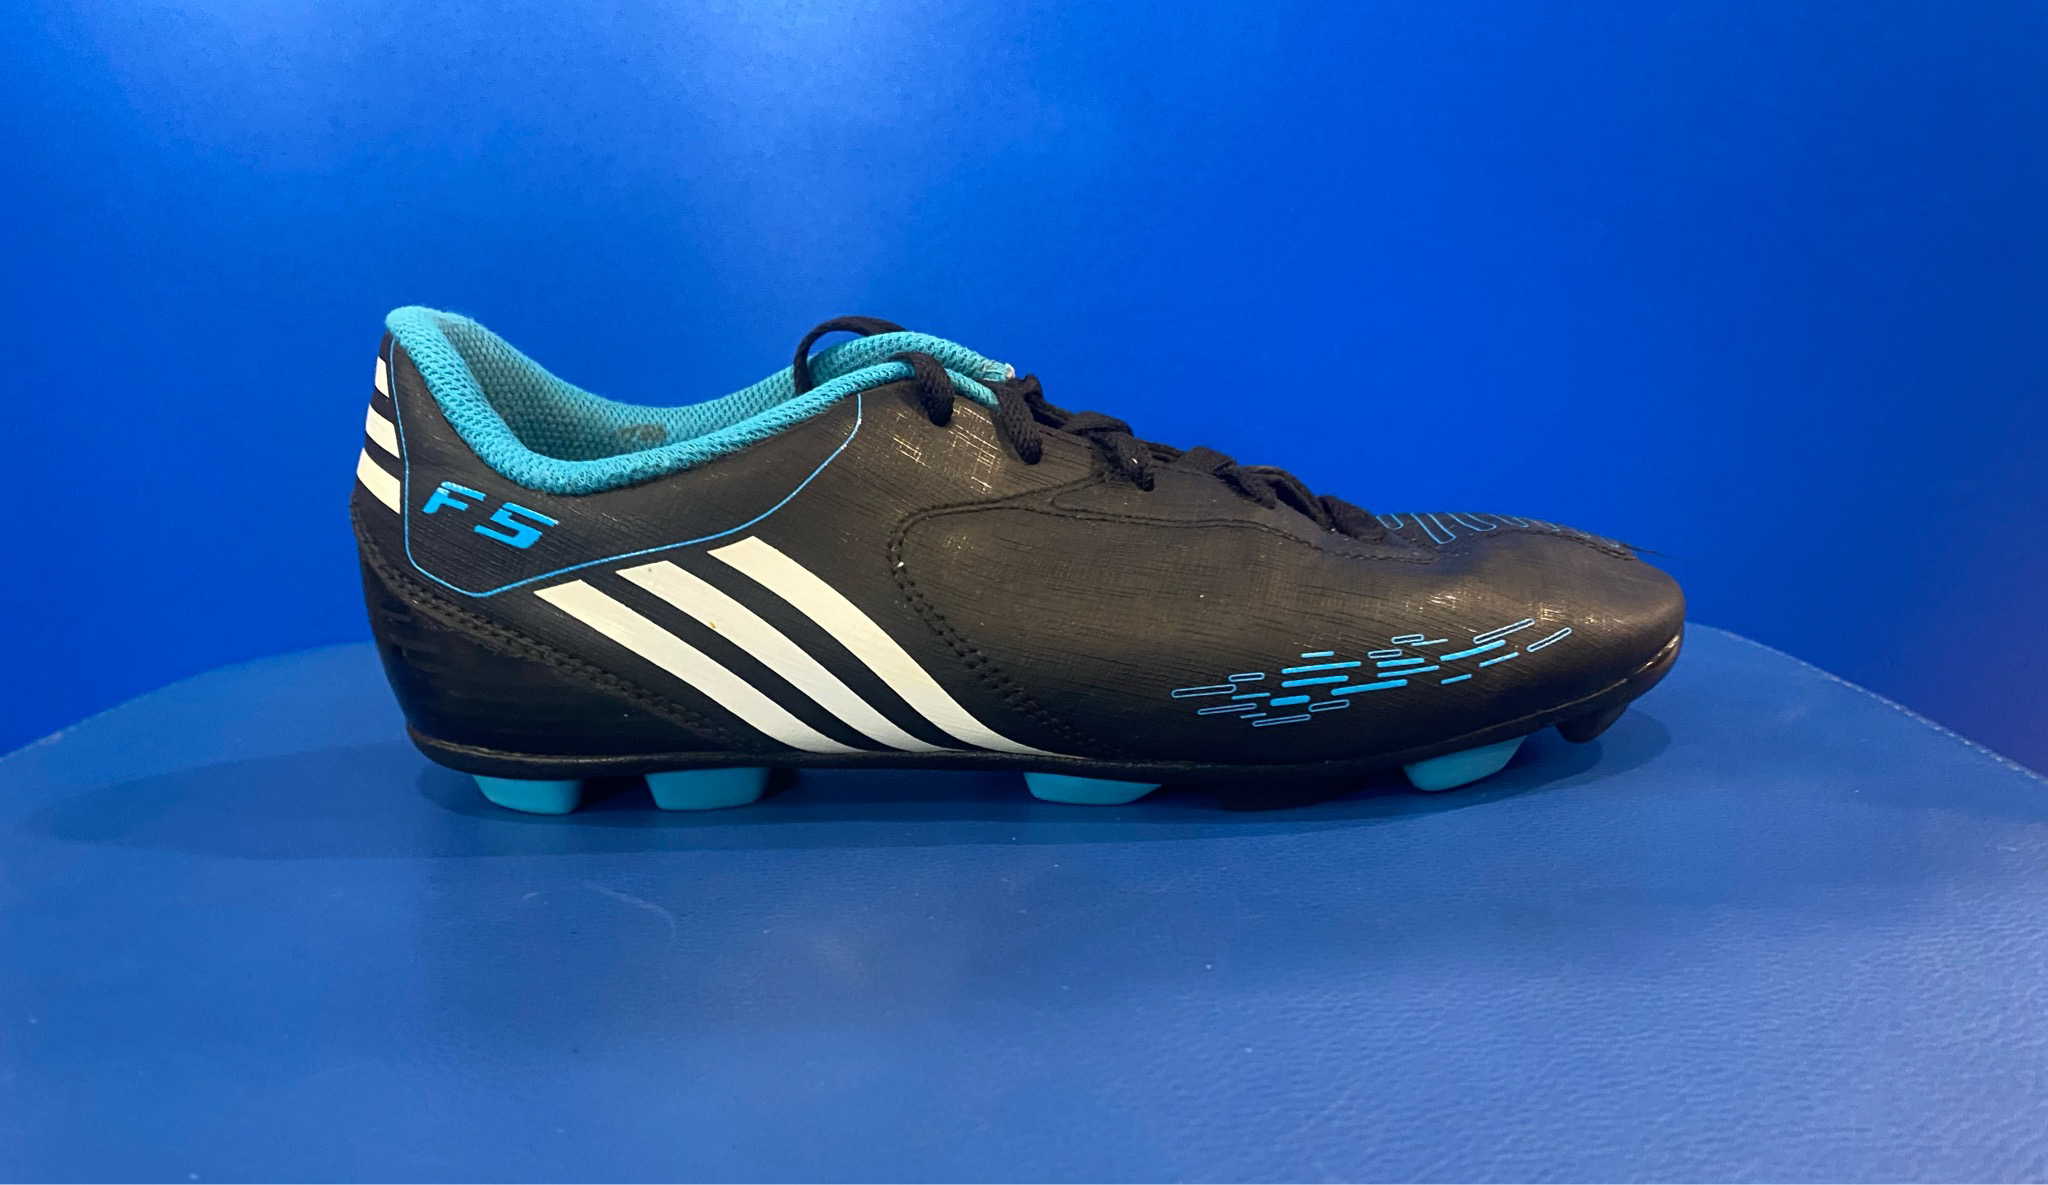 Adidas F5 TRX FG Blue/Black/White Soccer Cleats US 6 (Near-New) (EC729)